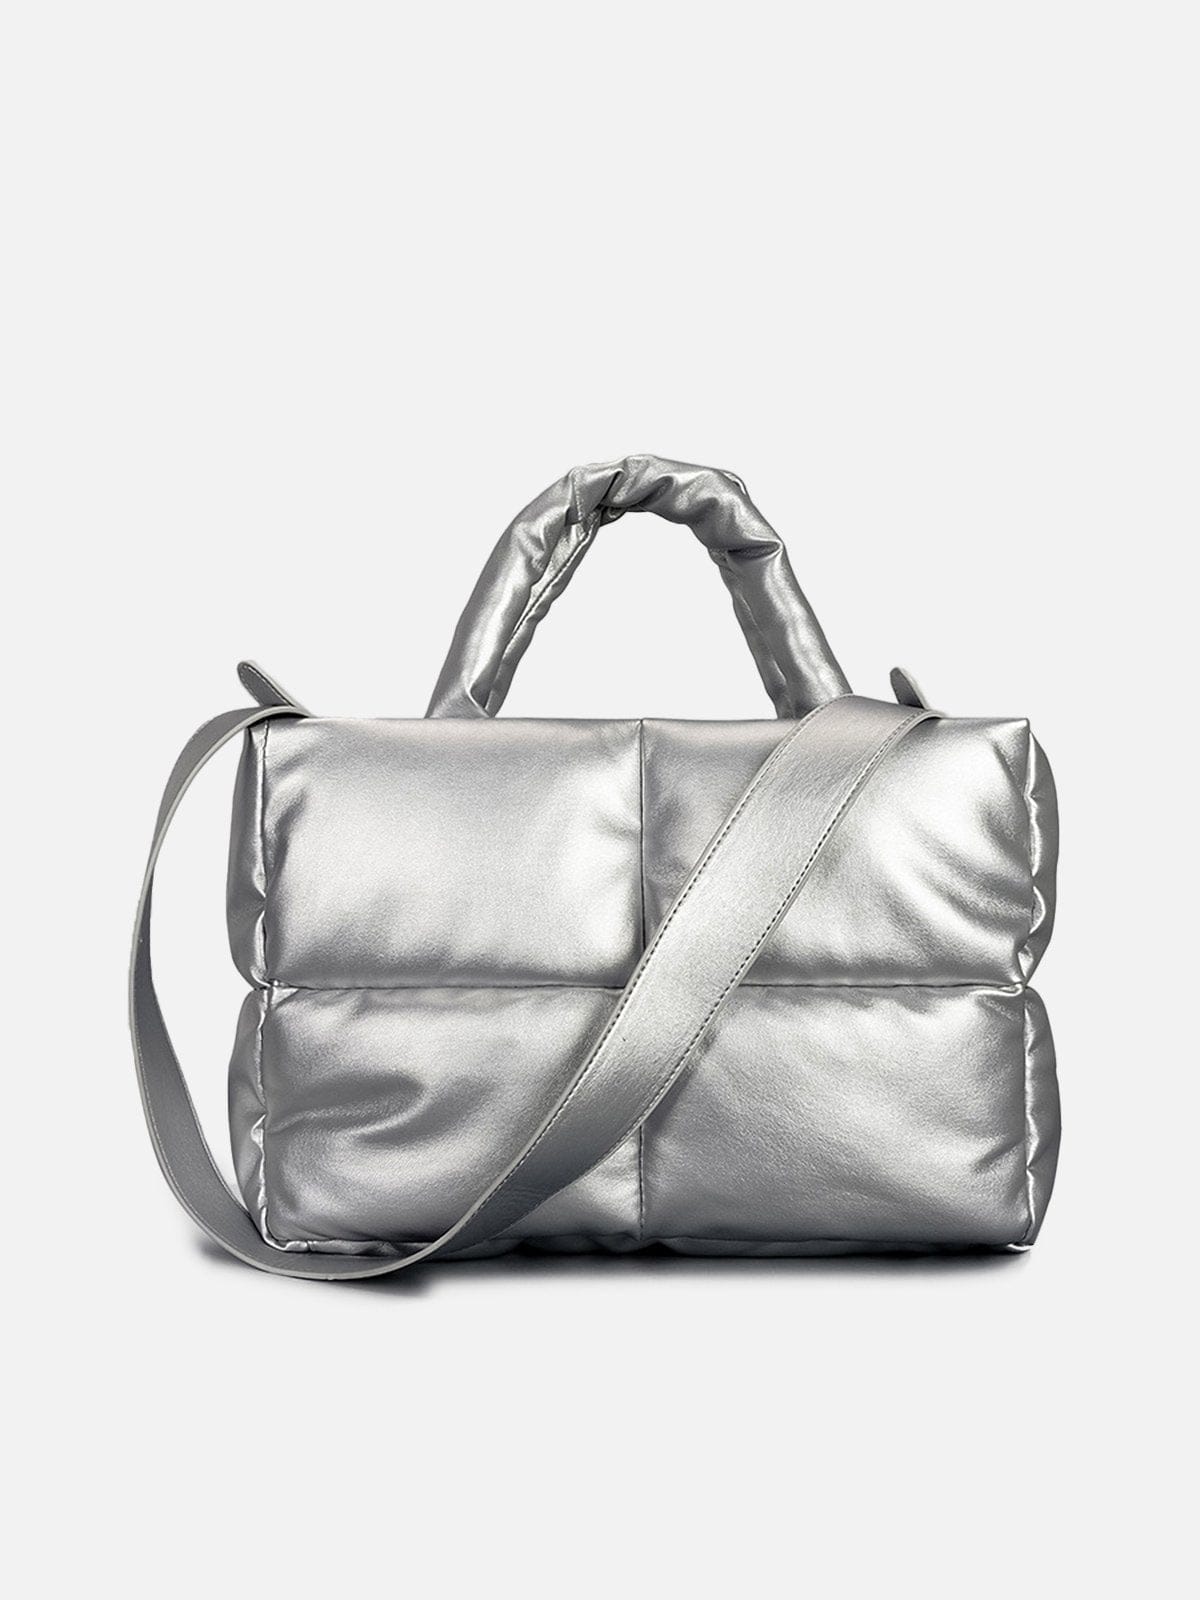 NEV Cotton-Filled Cross-Body Bag